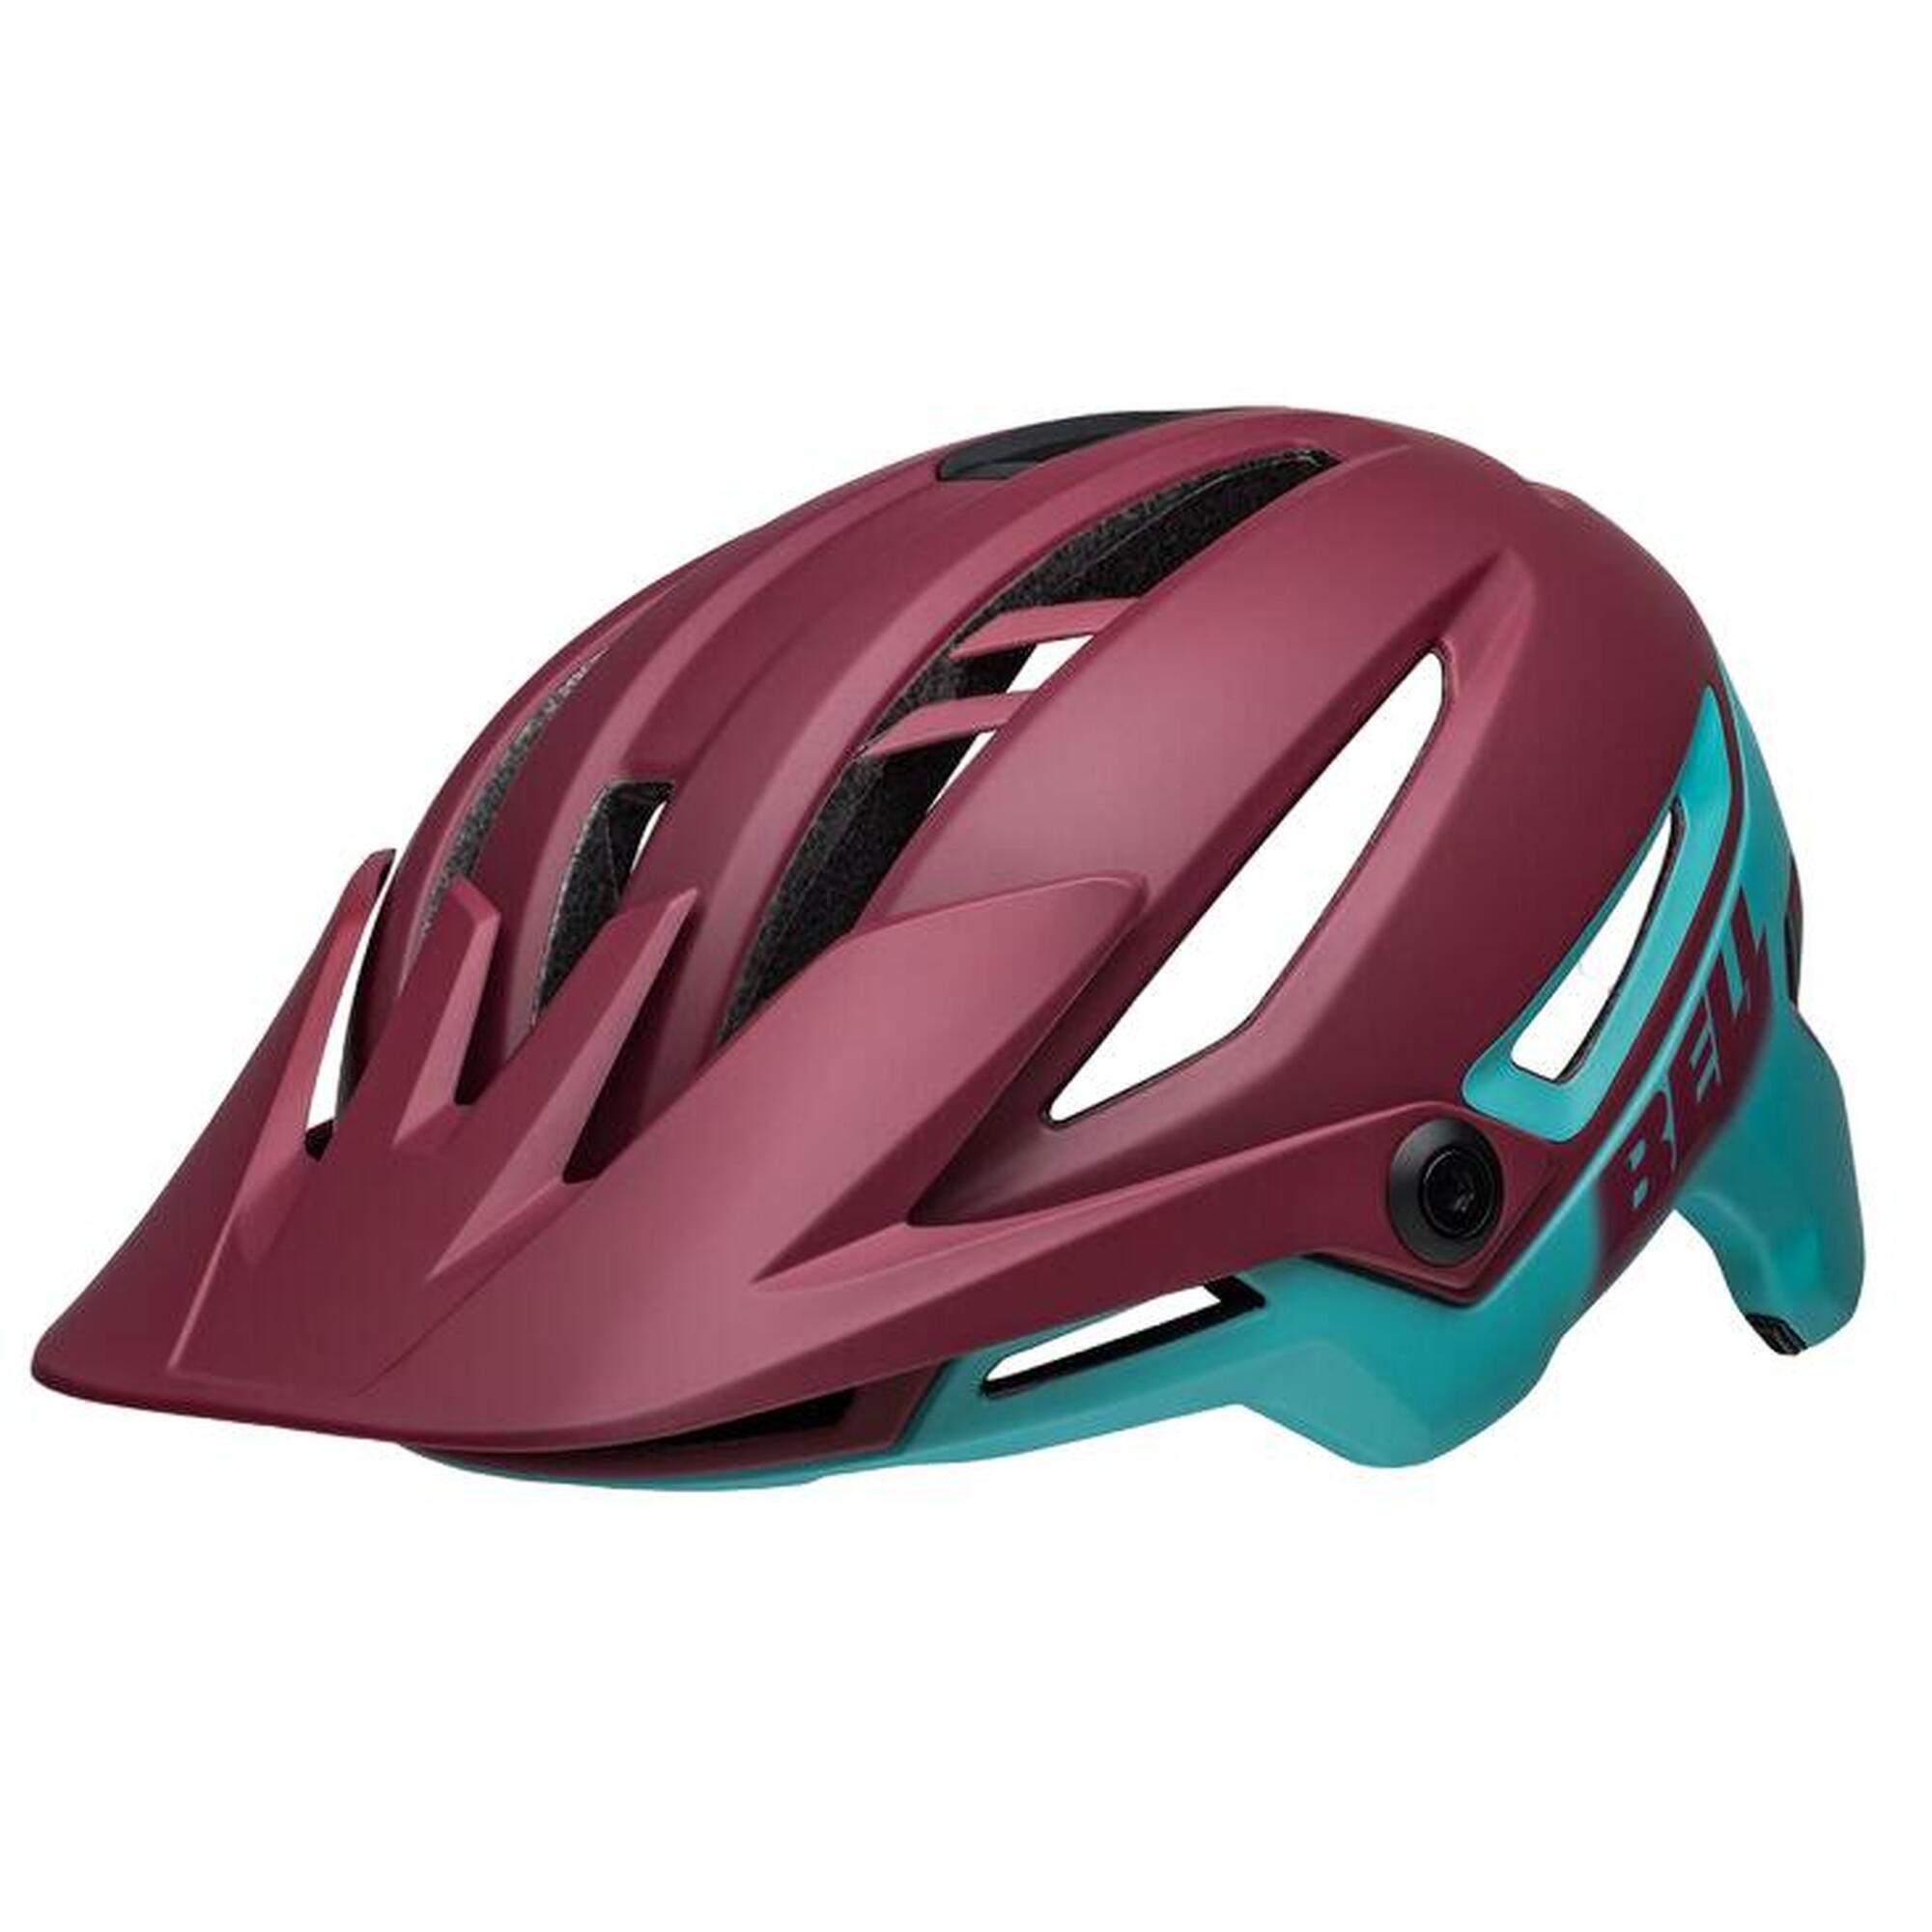 z20 aero велосипедный шлем bell цвет weiss Велосипедный шлем Sixer BELL, цвет rot